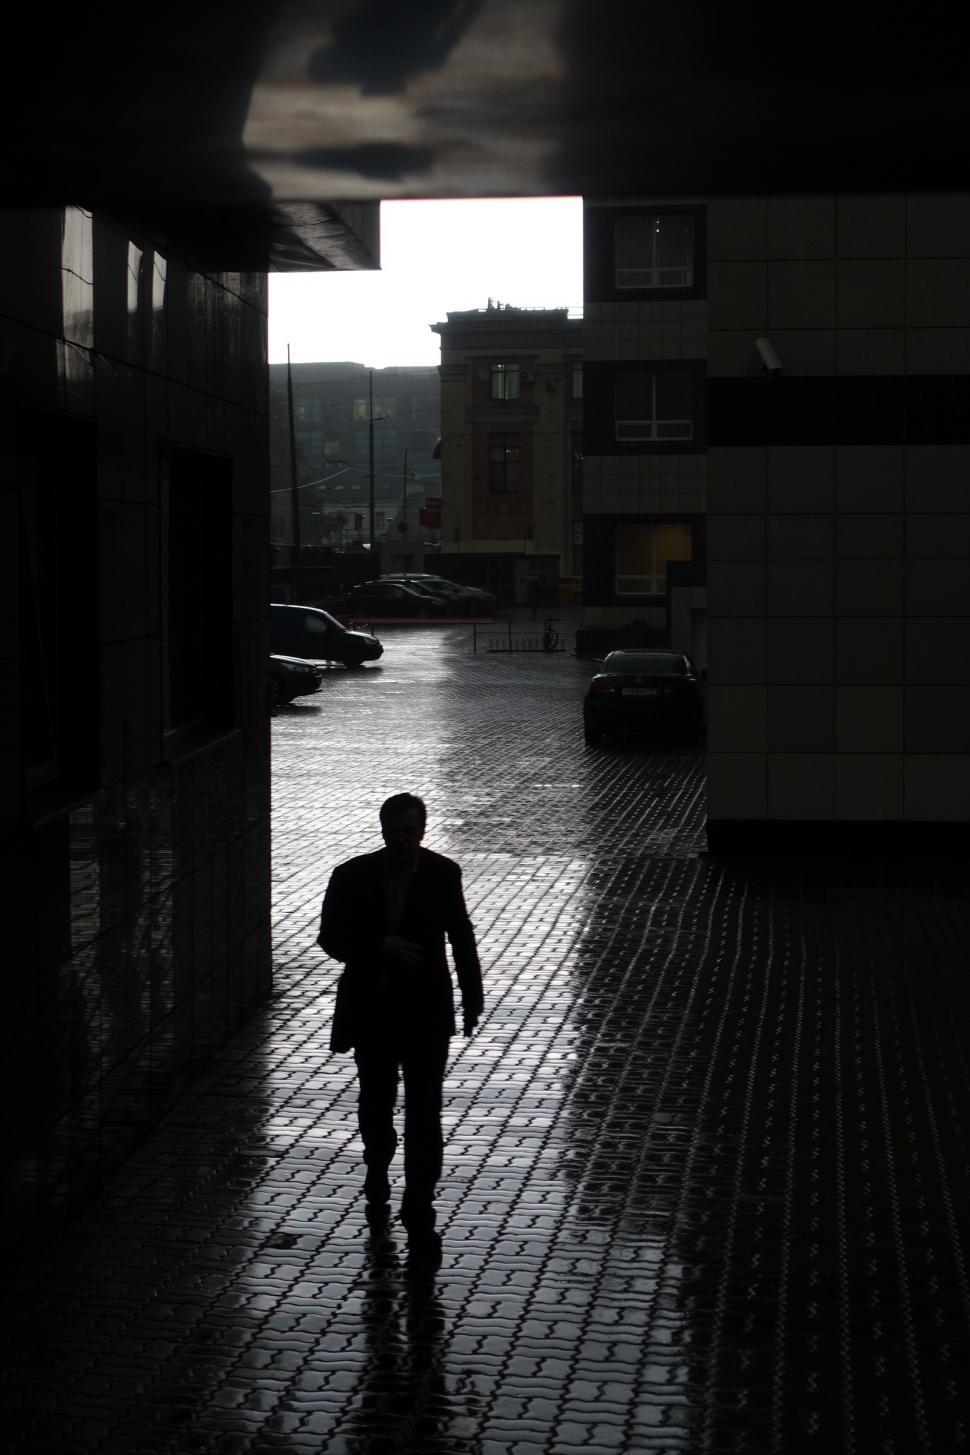 Free Image of Man Walking Down a Rainy Street 